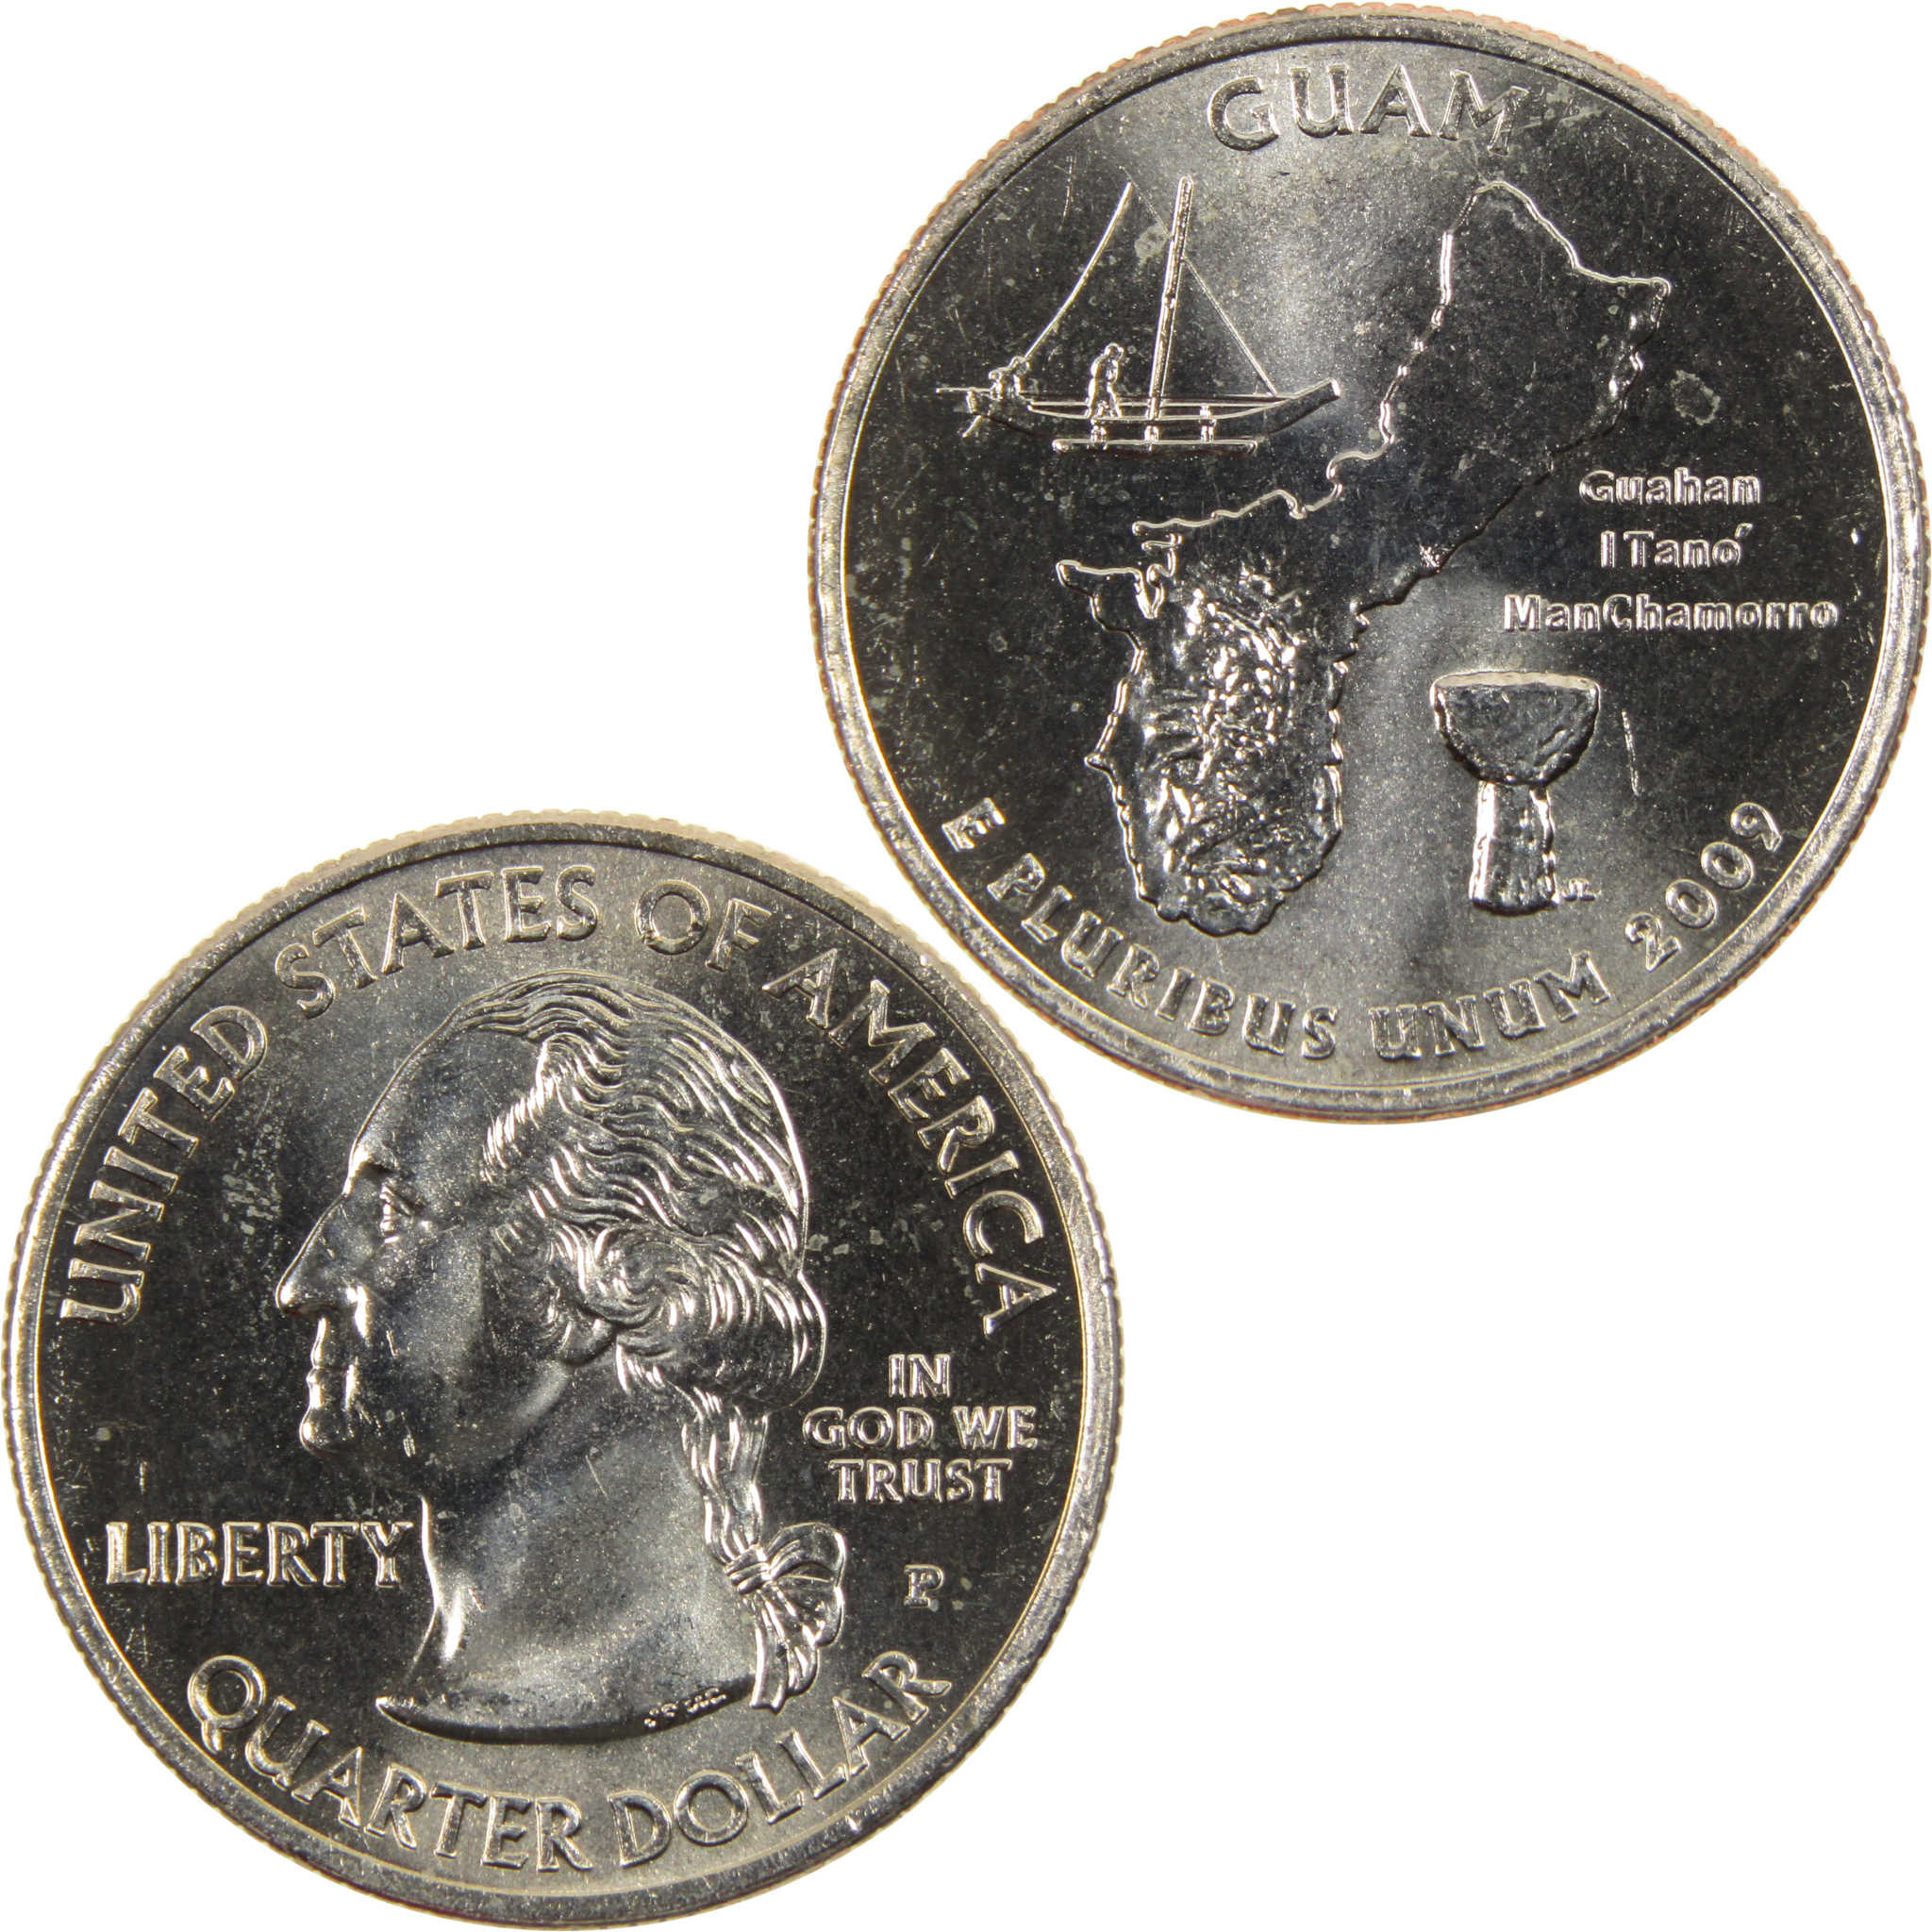 2009 P Guam DC & US Territories Quarter BU Uncirculated Clad 25c Coin